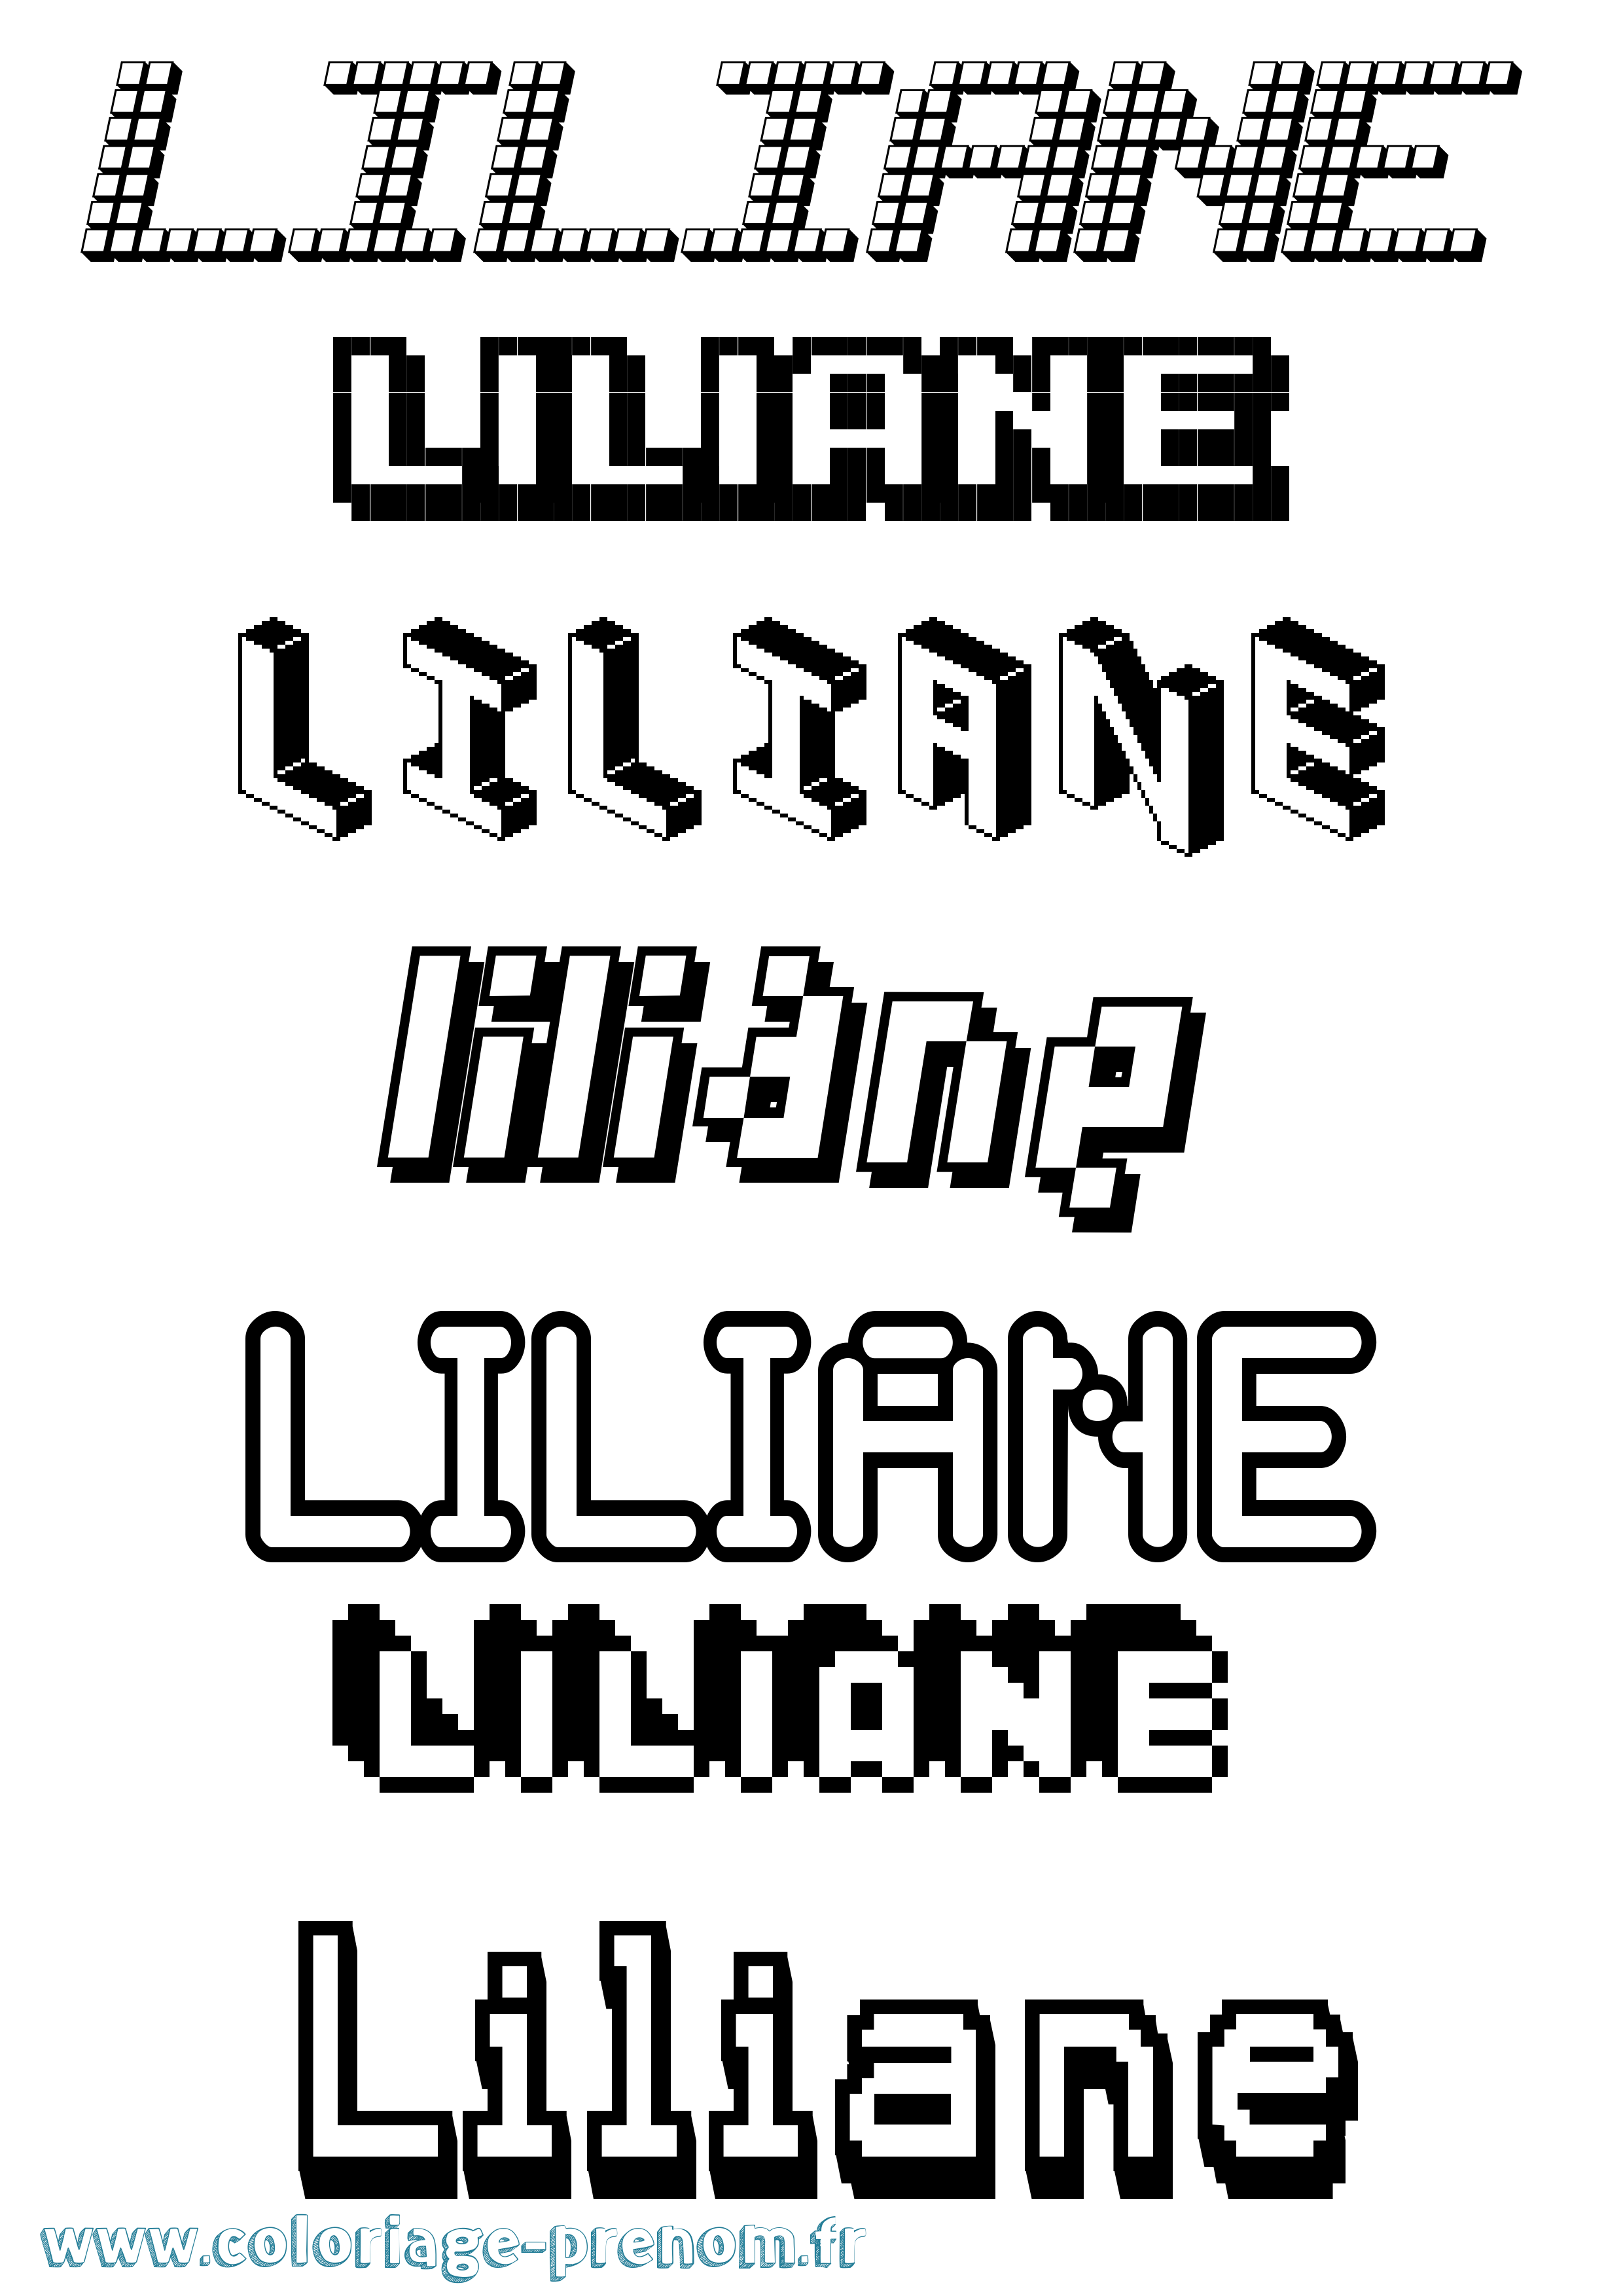 Coloriage prénom Liliane